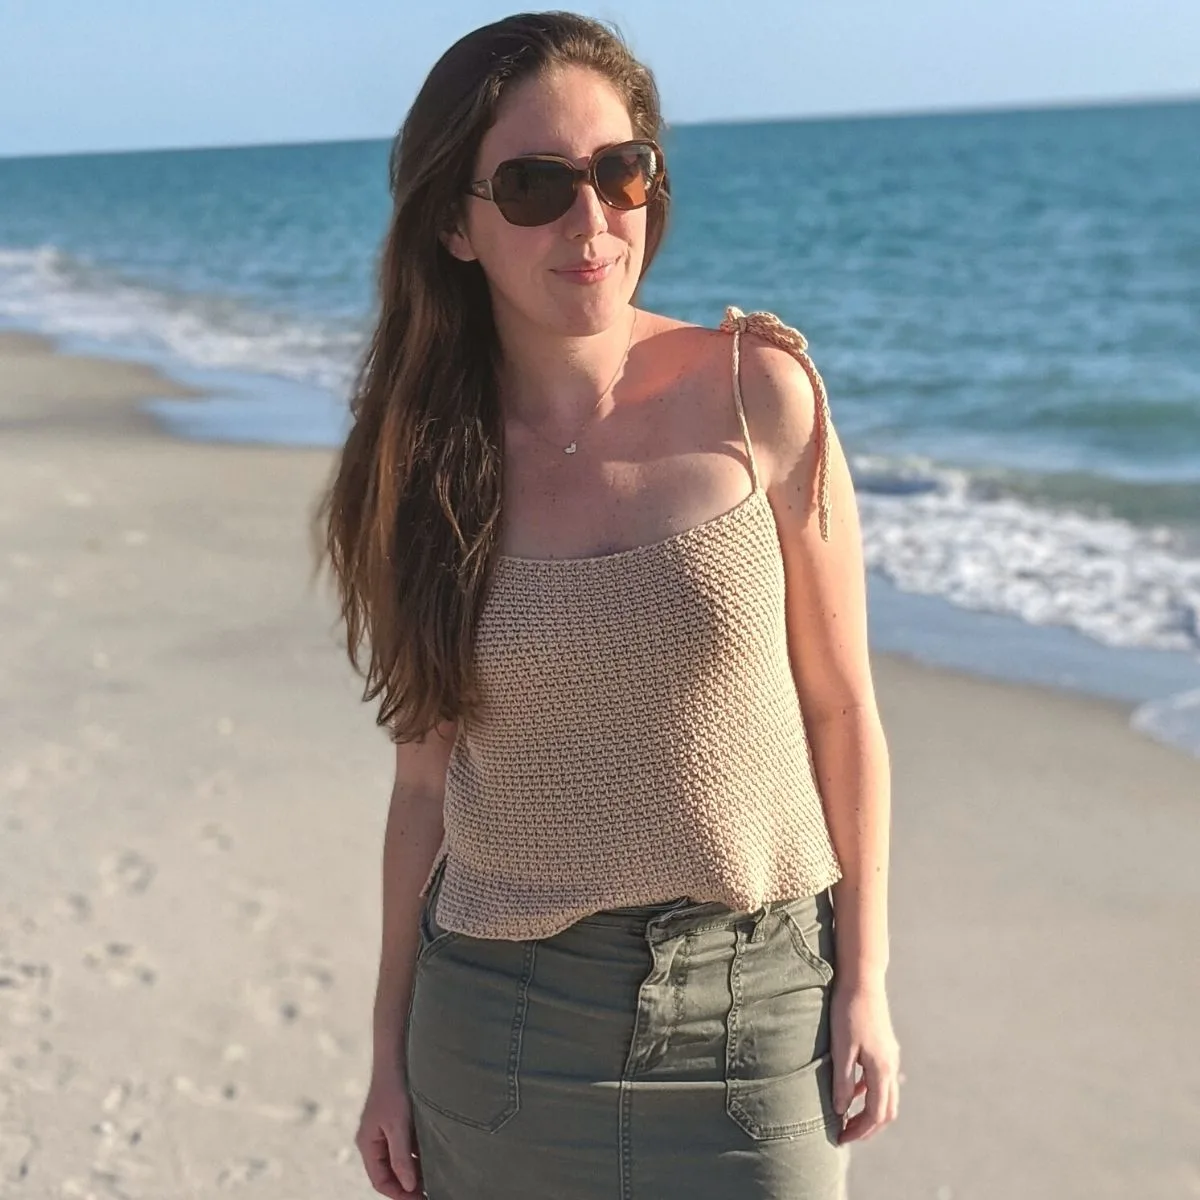 Model is wearing a sleeveless crochet summer top on the beach.